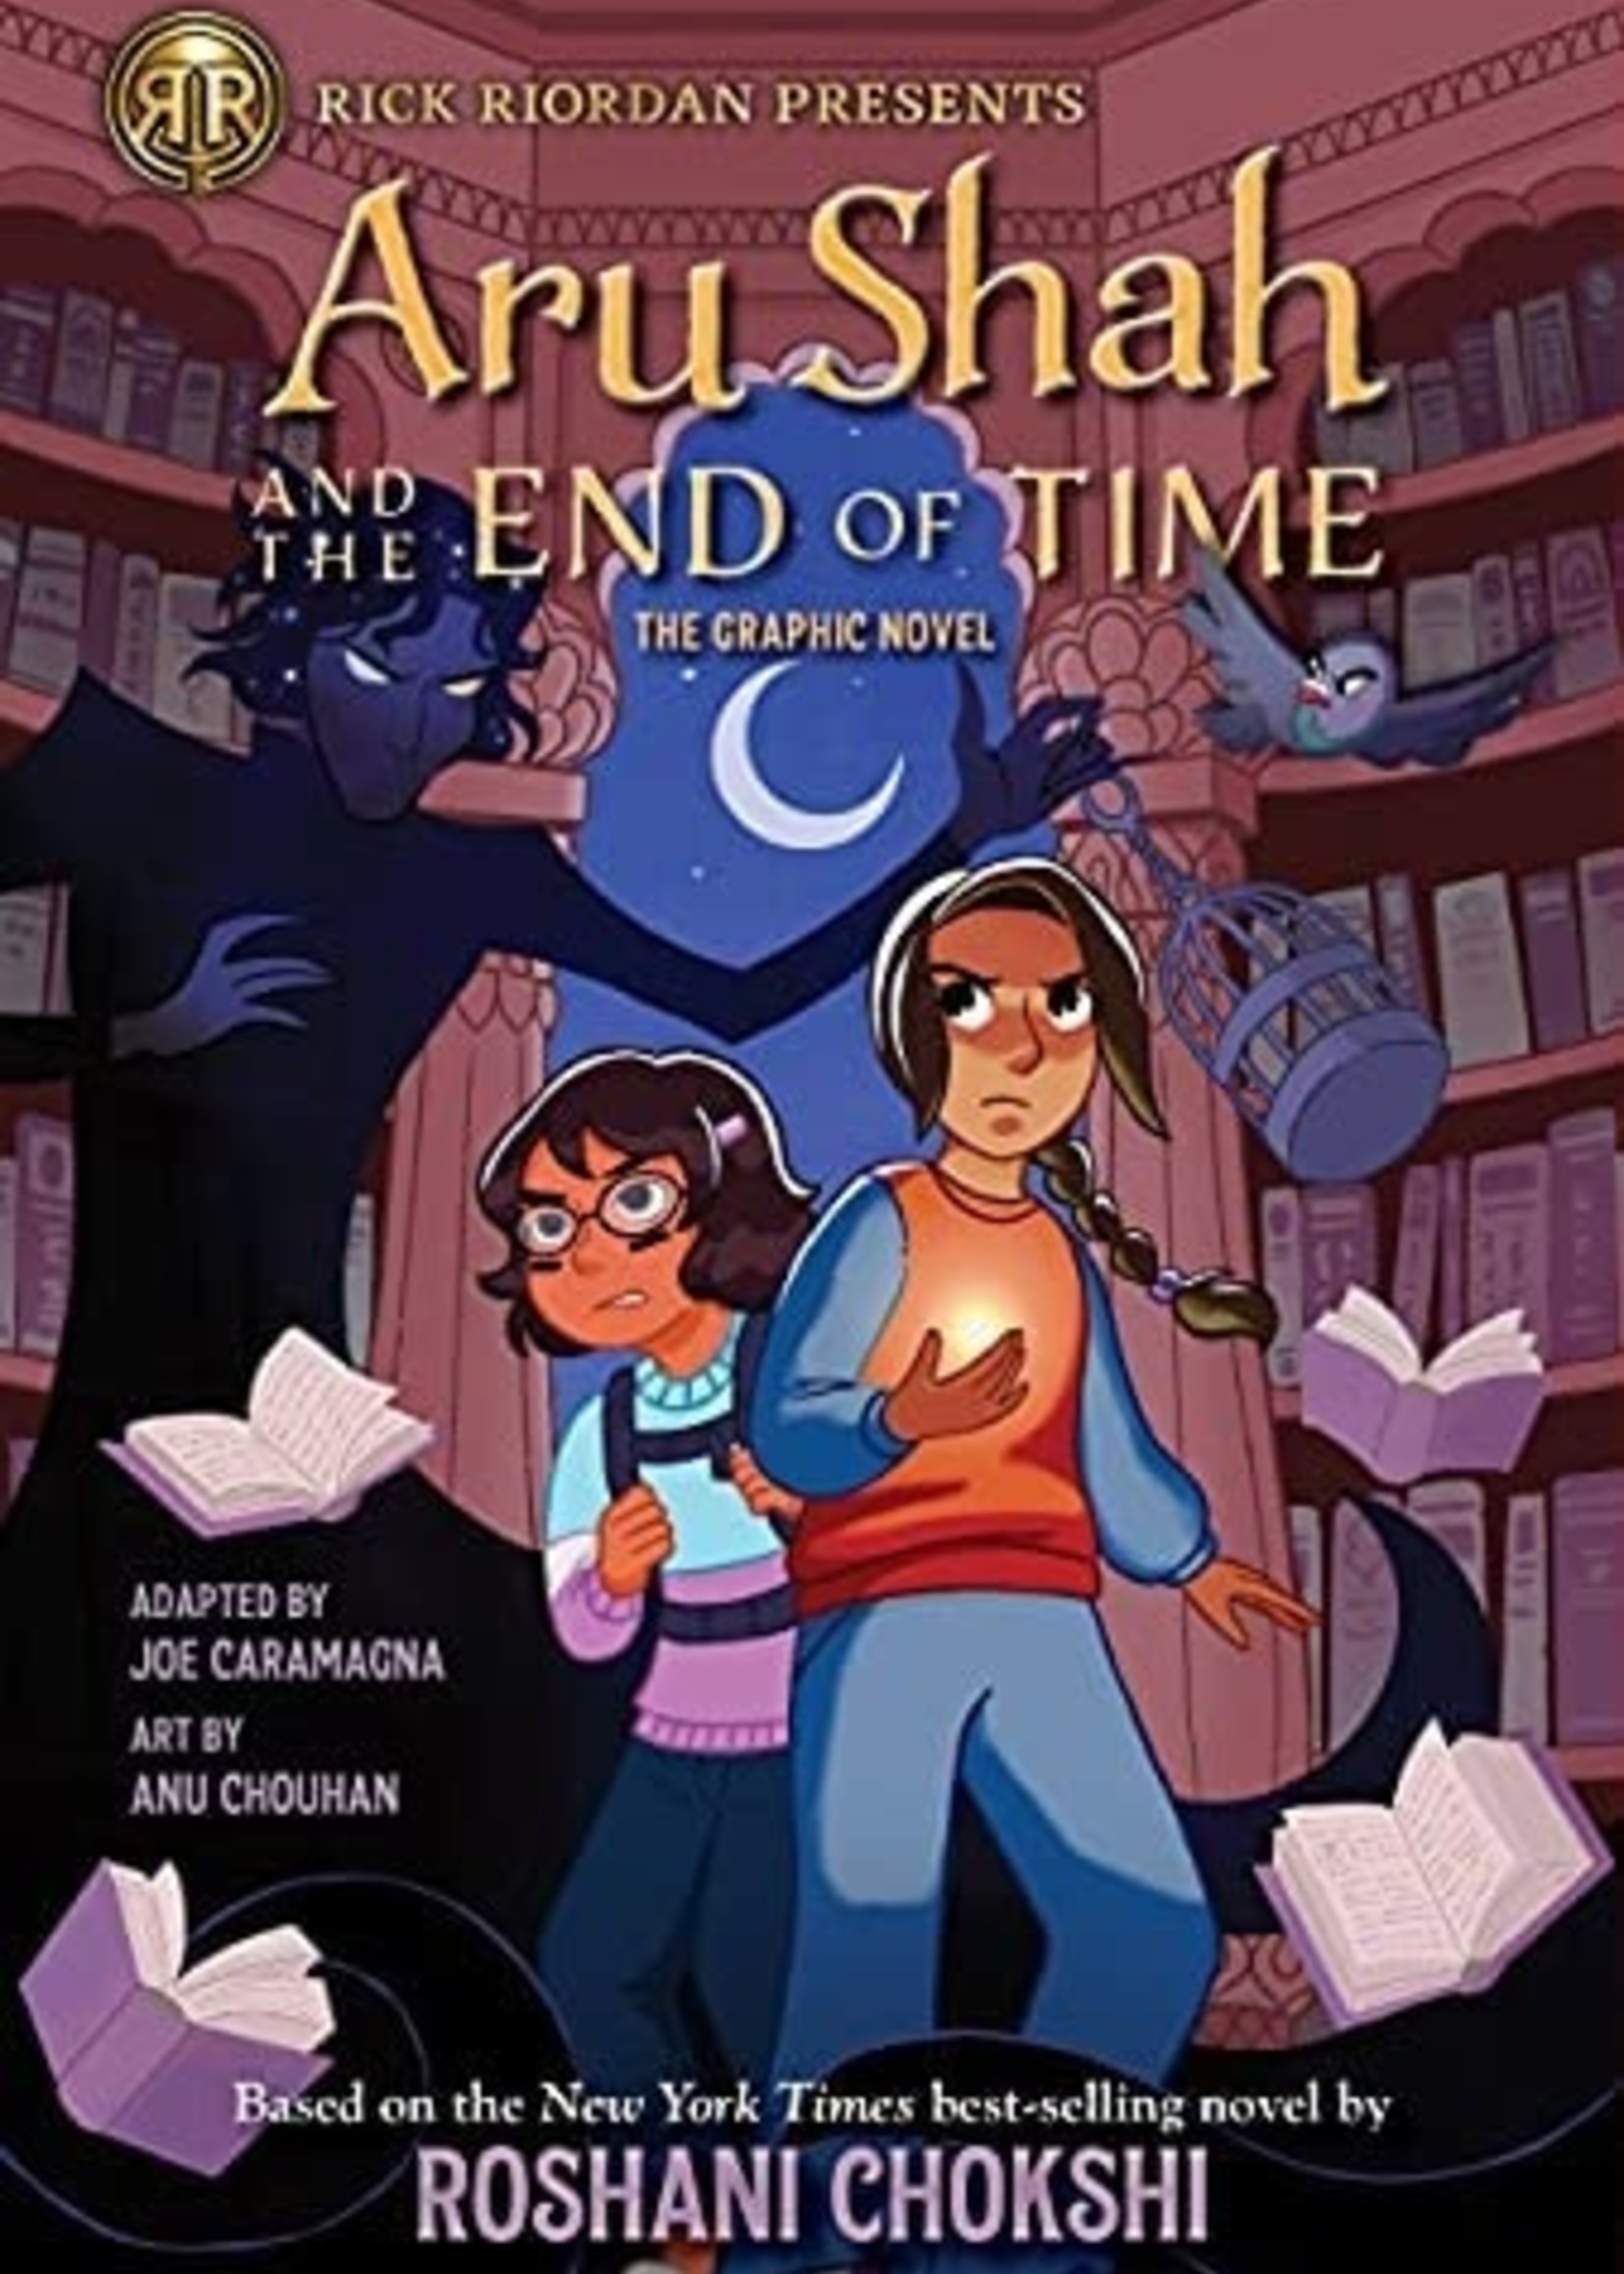 Rick Riordan Presents: Pandava Graphic Novel #01, Aru Shah and the End of Time - Paperback